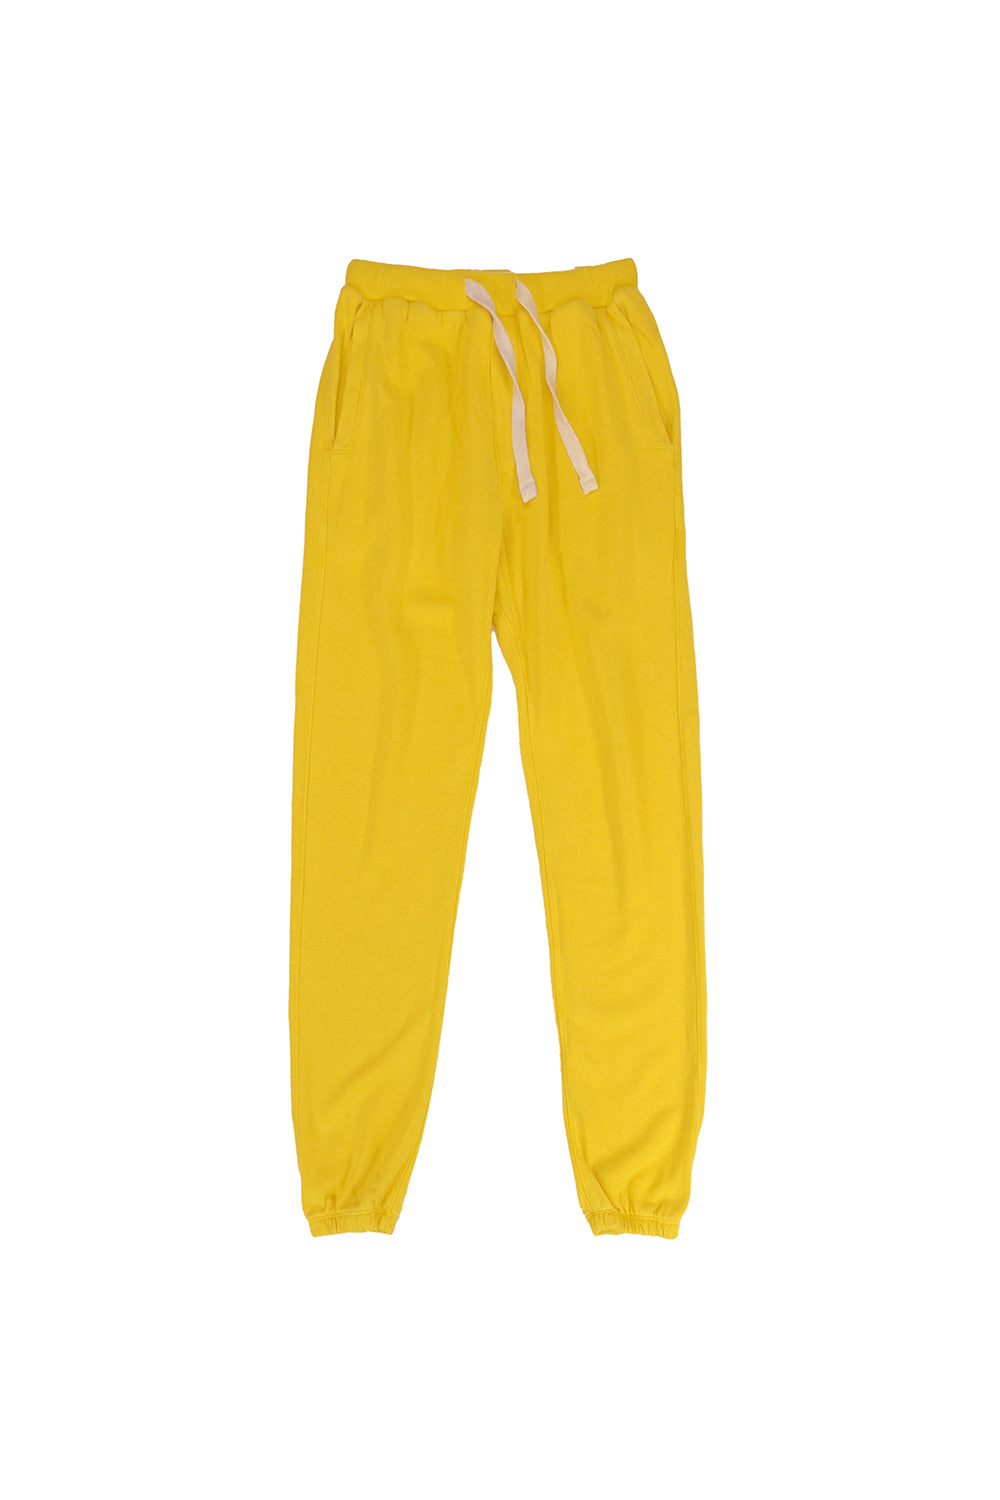 Yelapa Sweatpant | Jungmaven Hemp Clothing & Accessories / Color: Sunshine Yellow